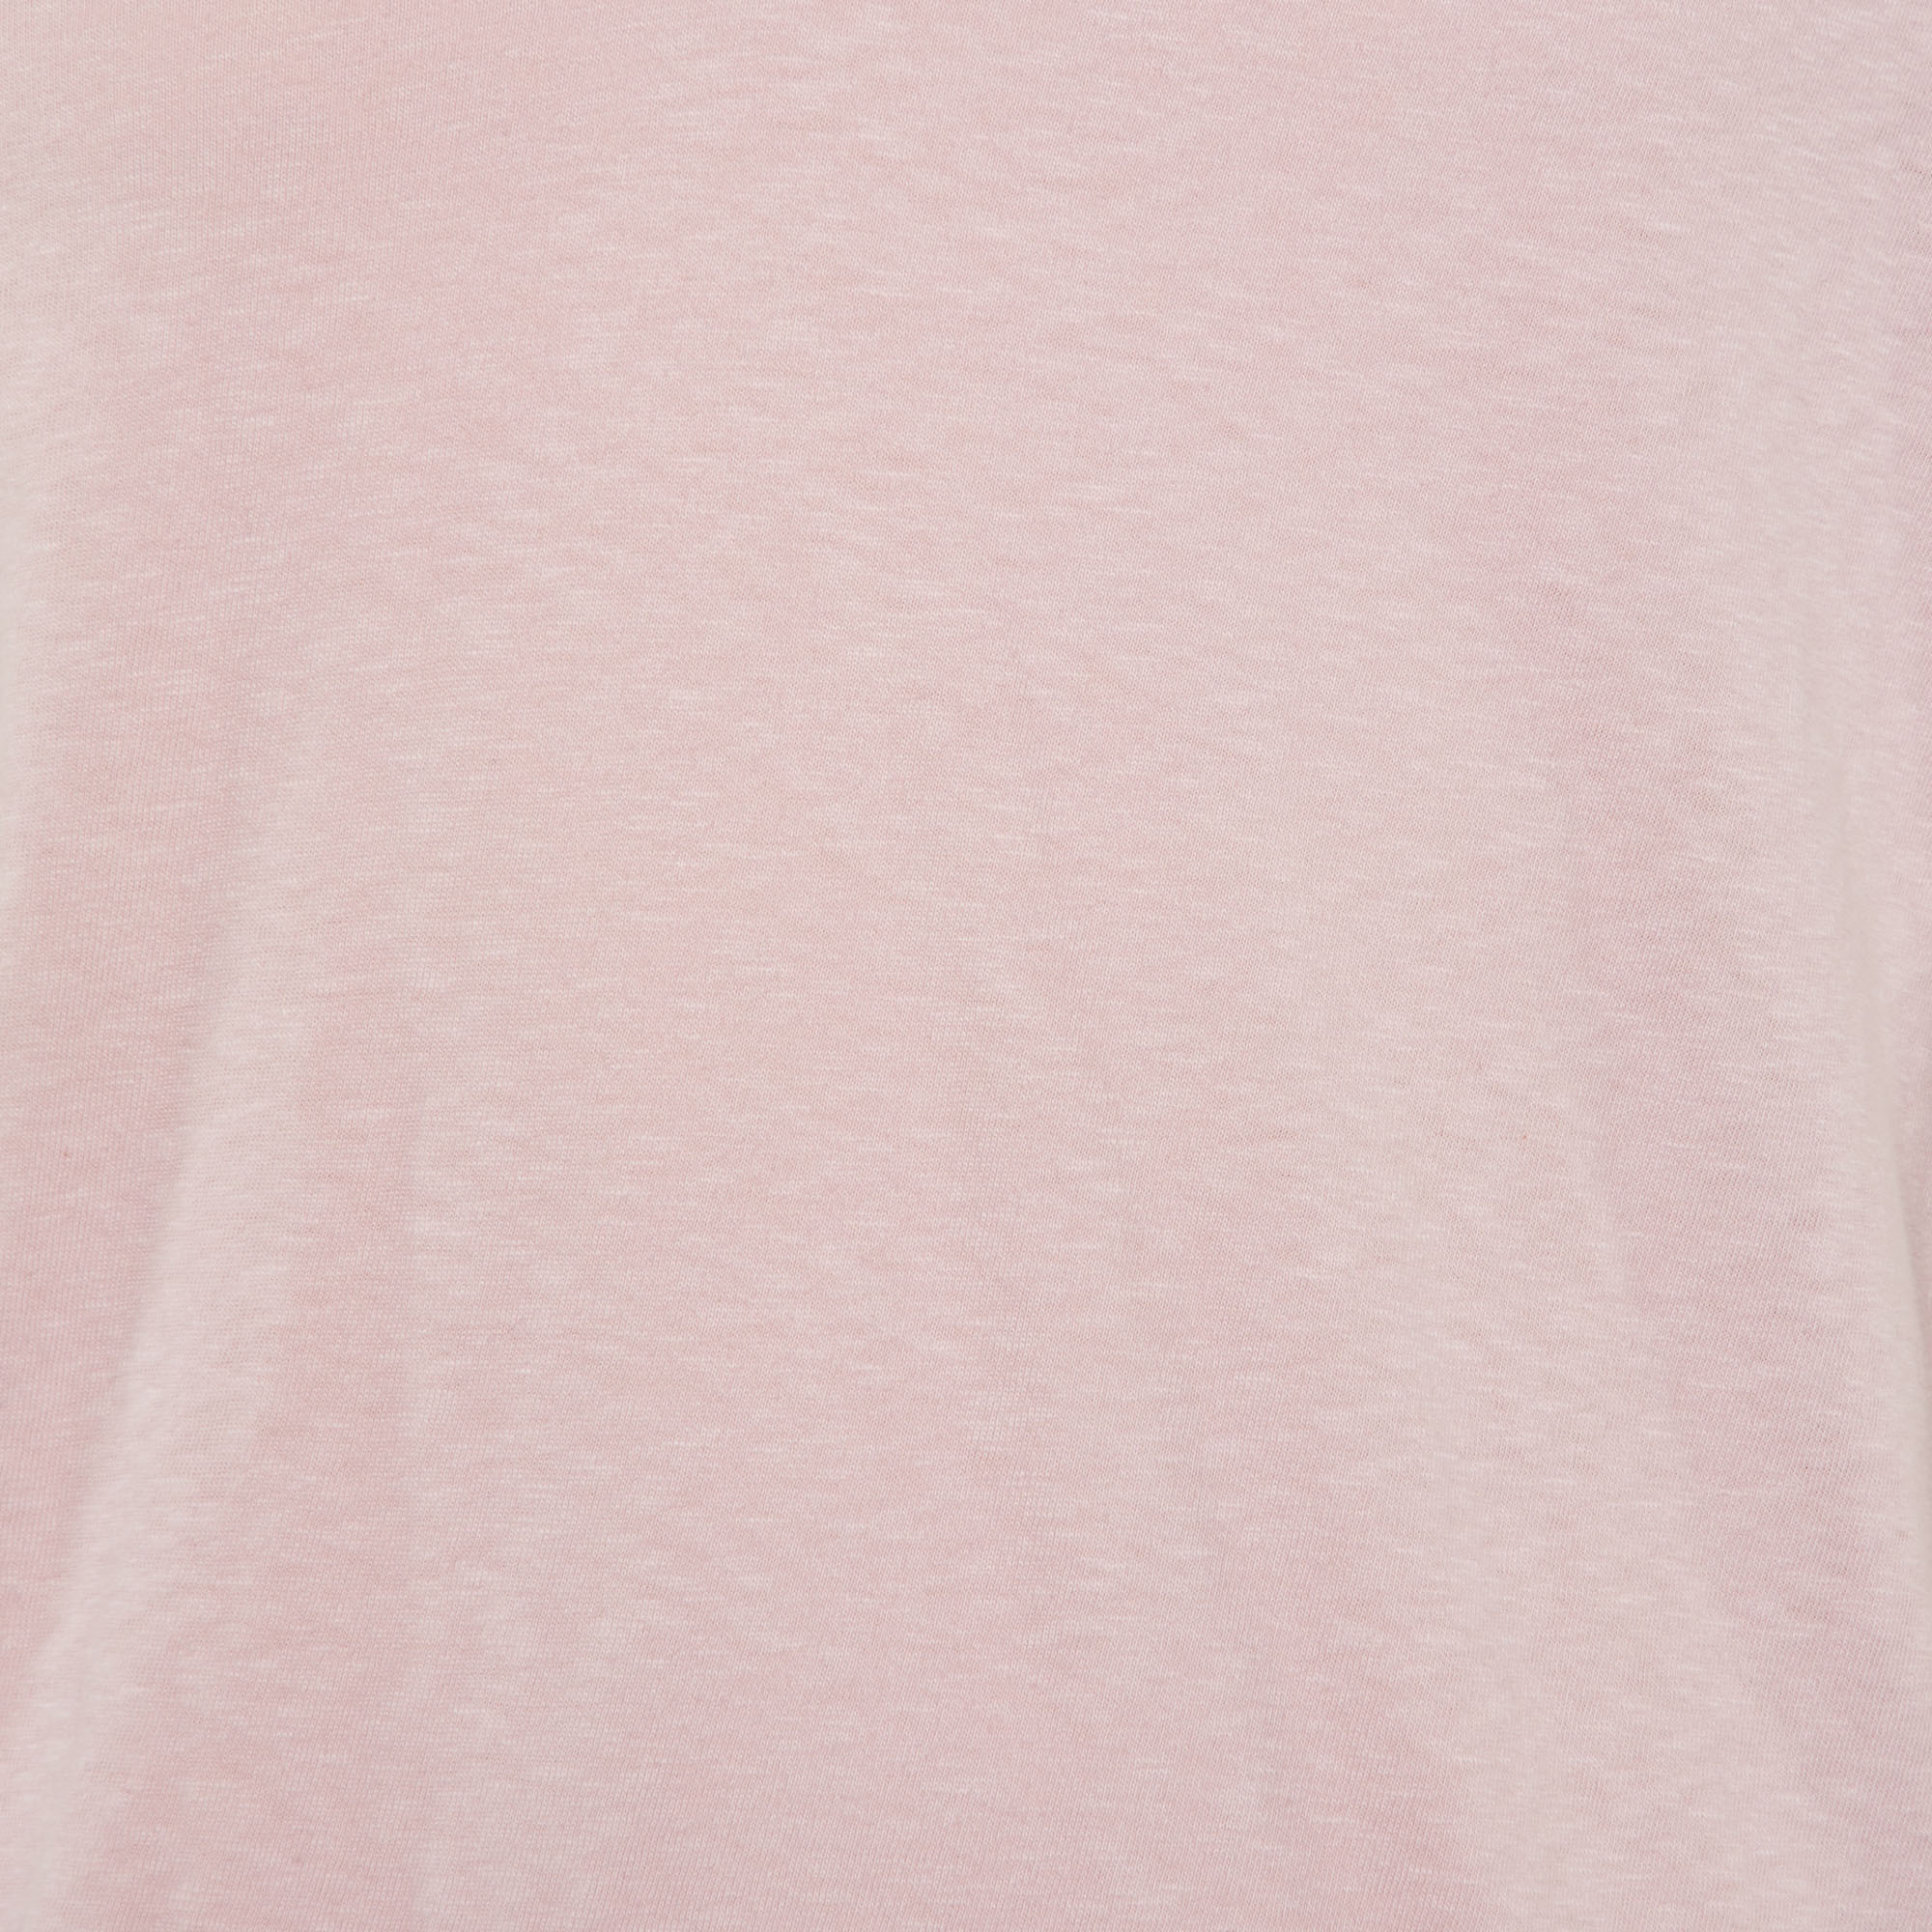 Tom Ford Light Pink Cotton Knit V-Neck T-Shirt XL